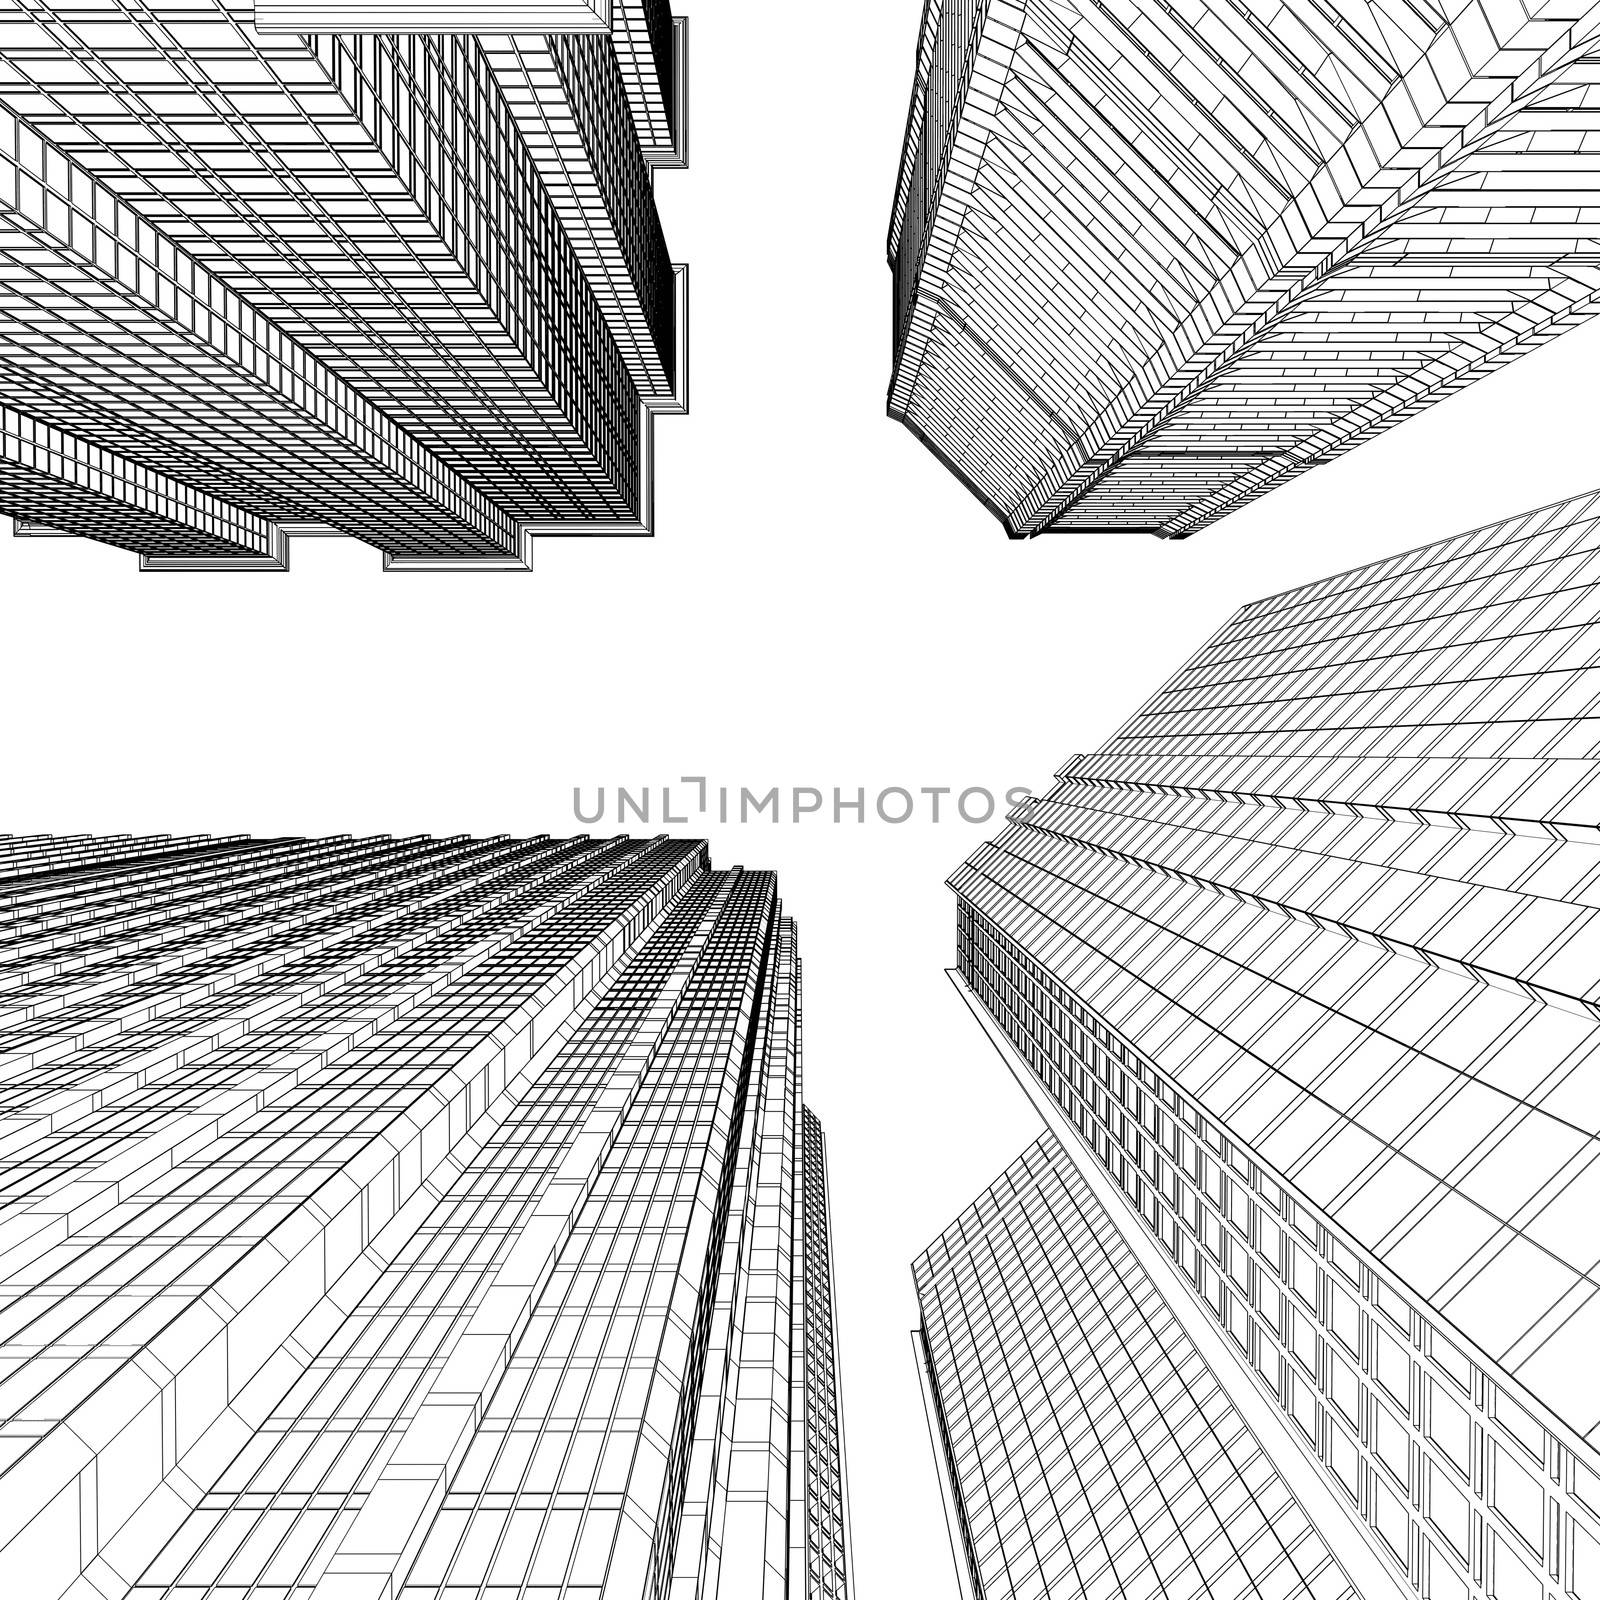 Skyscraper rendering in lines by cherezoff